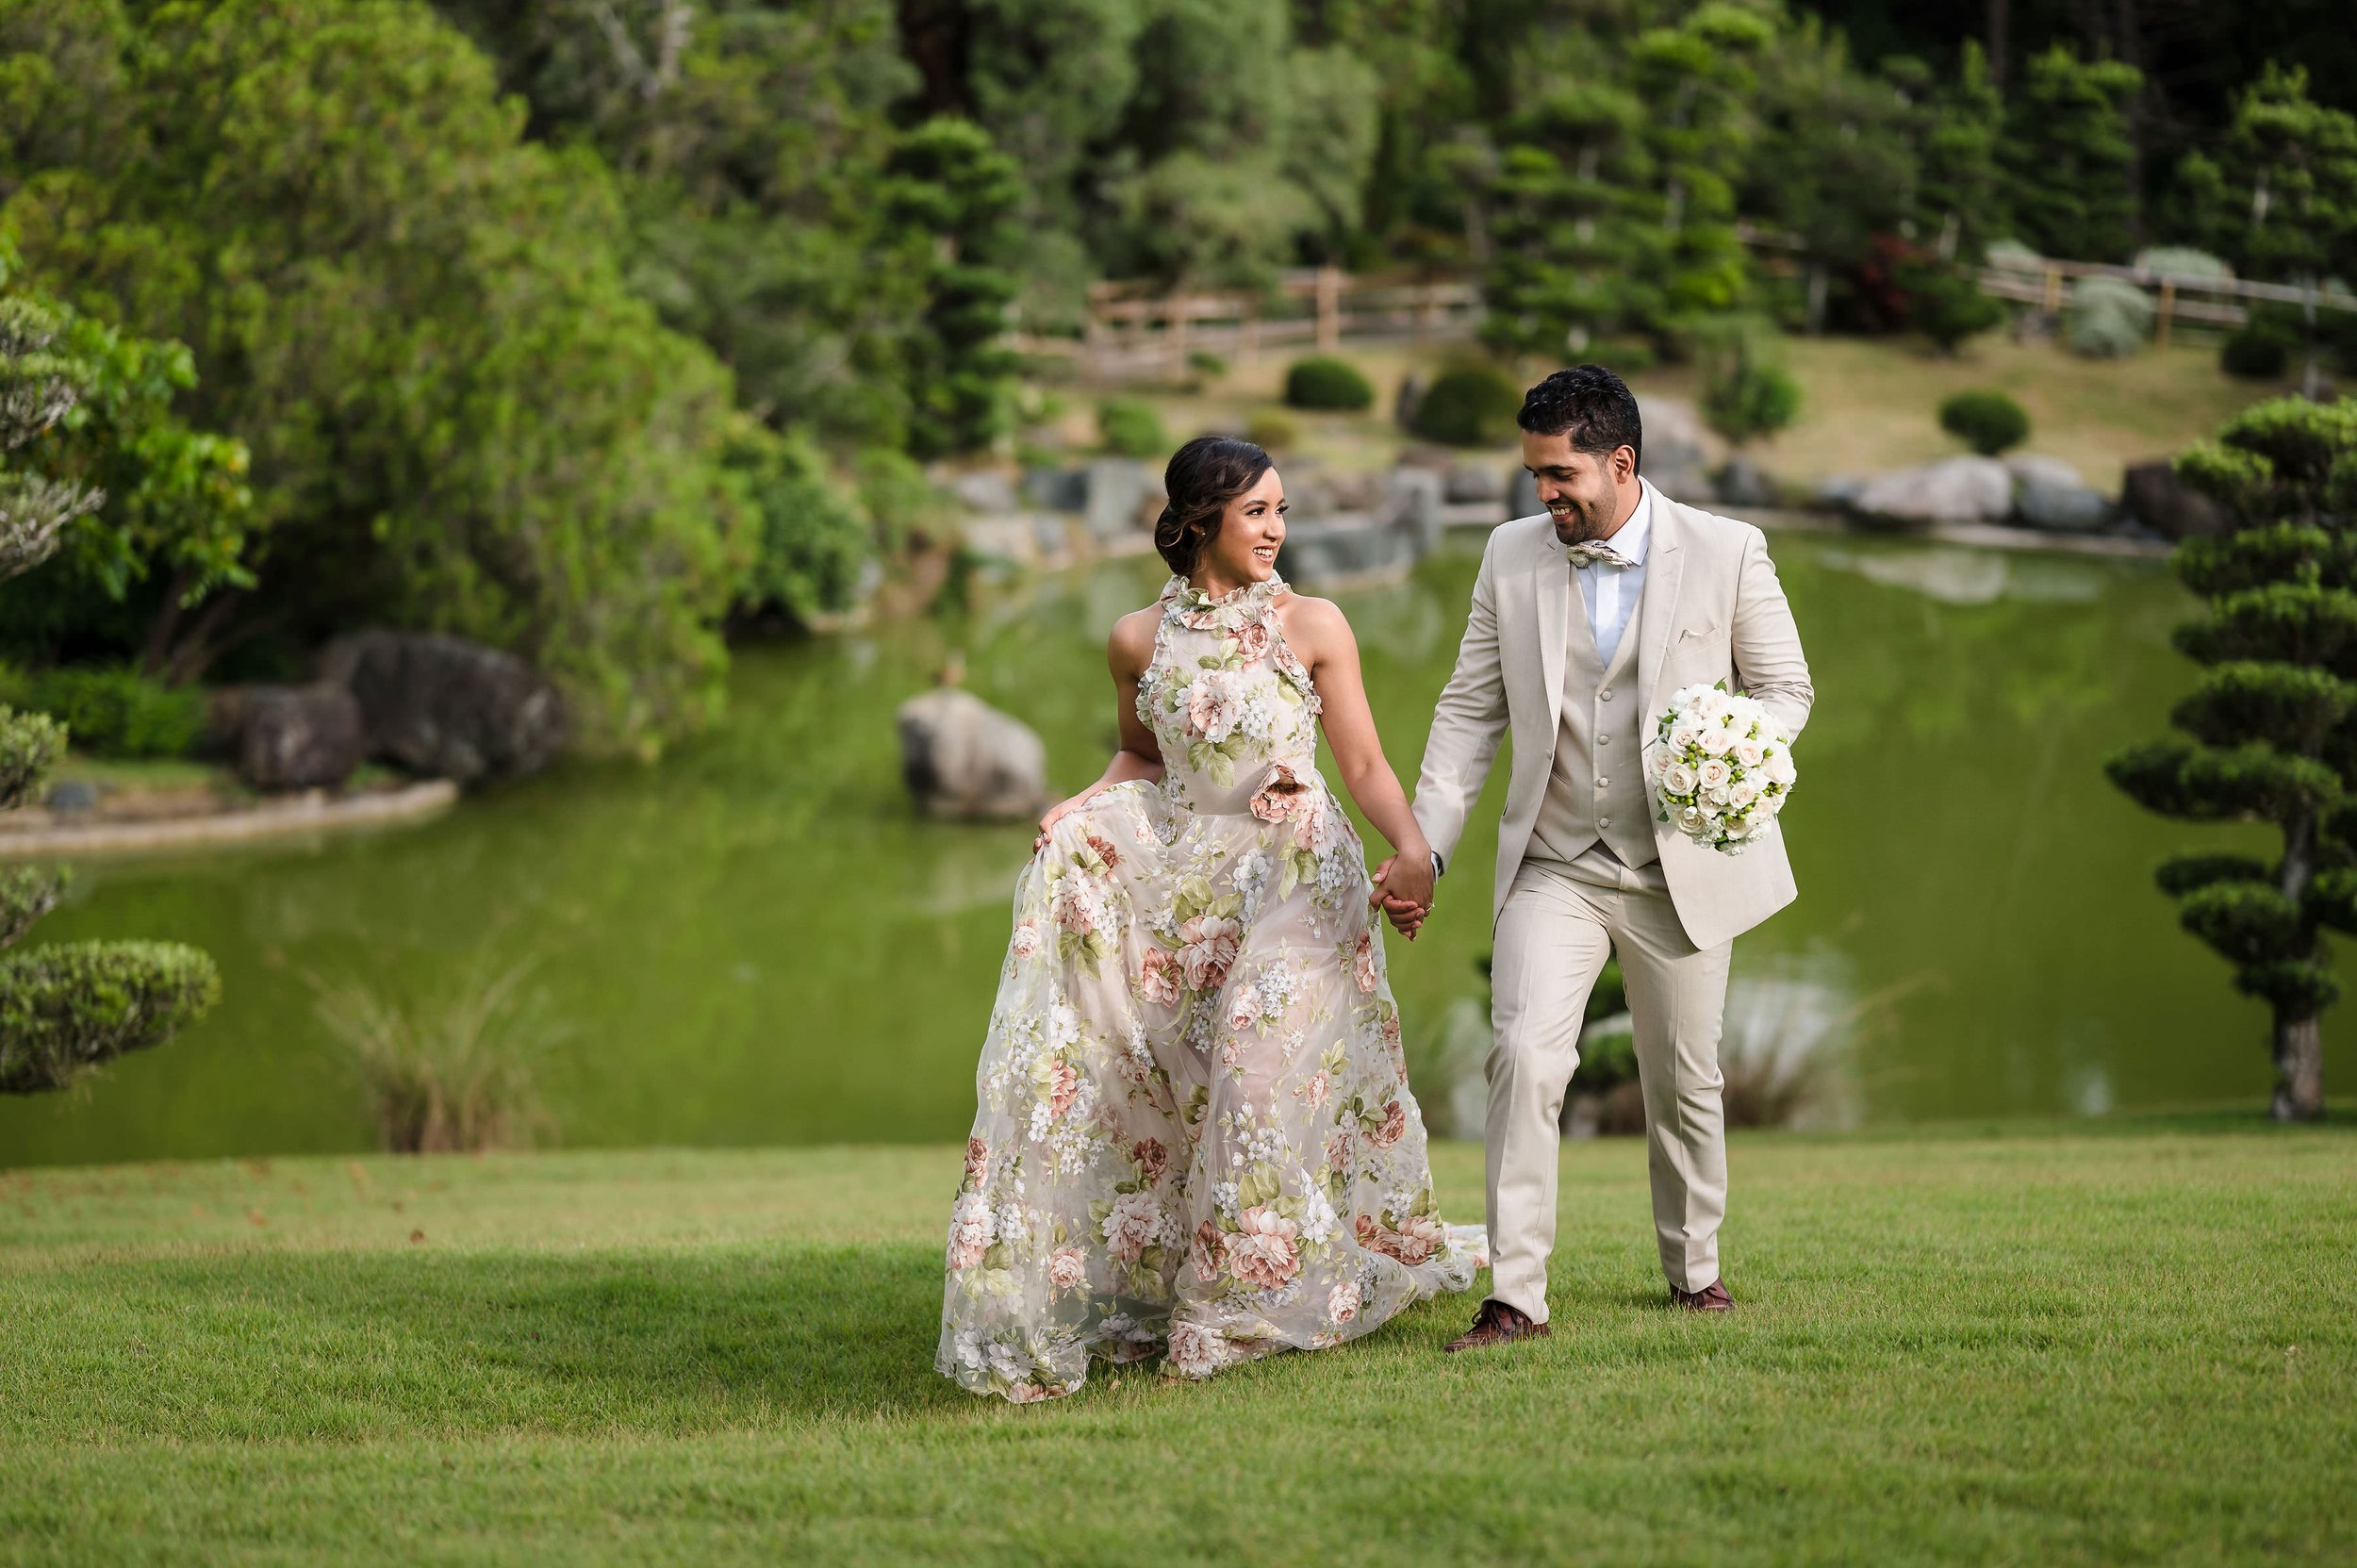 Jardin_Botanico_Wedding_walking_couple_photoshoot_sesion_preboda_Cristina_Angel_5678.JPG